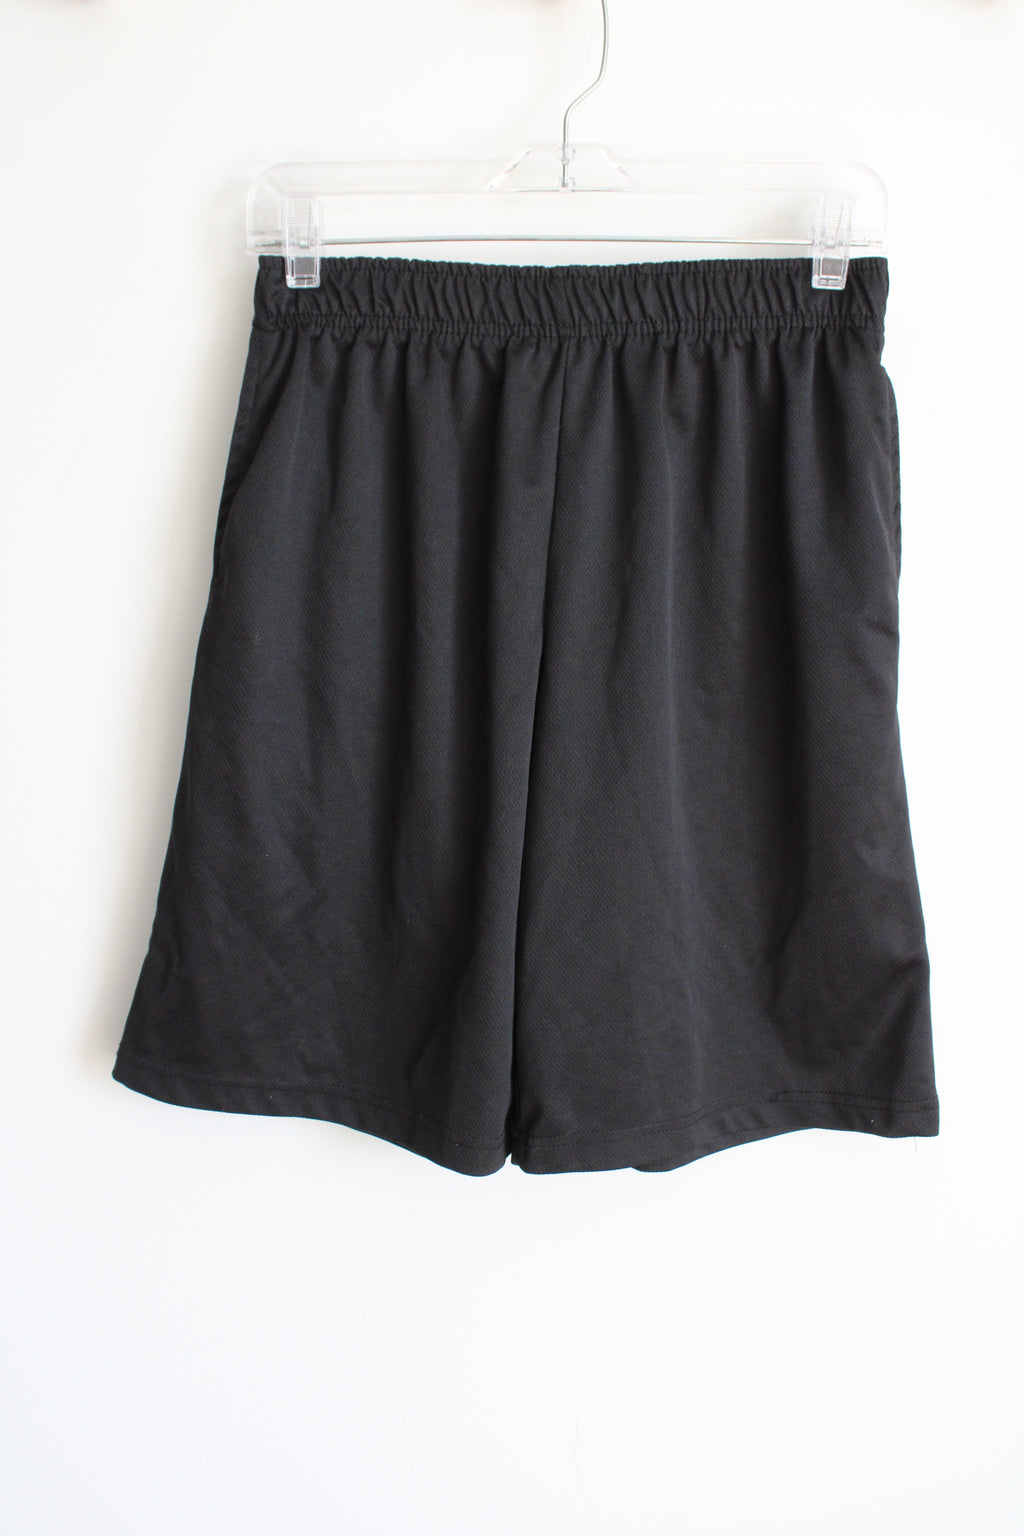 Zune Pro Black Athletic Shorts | S